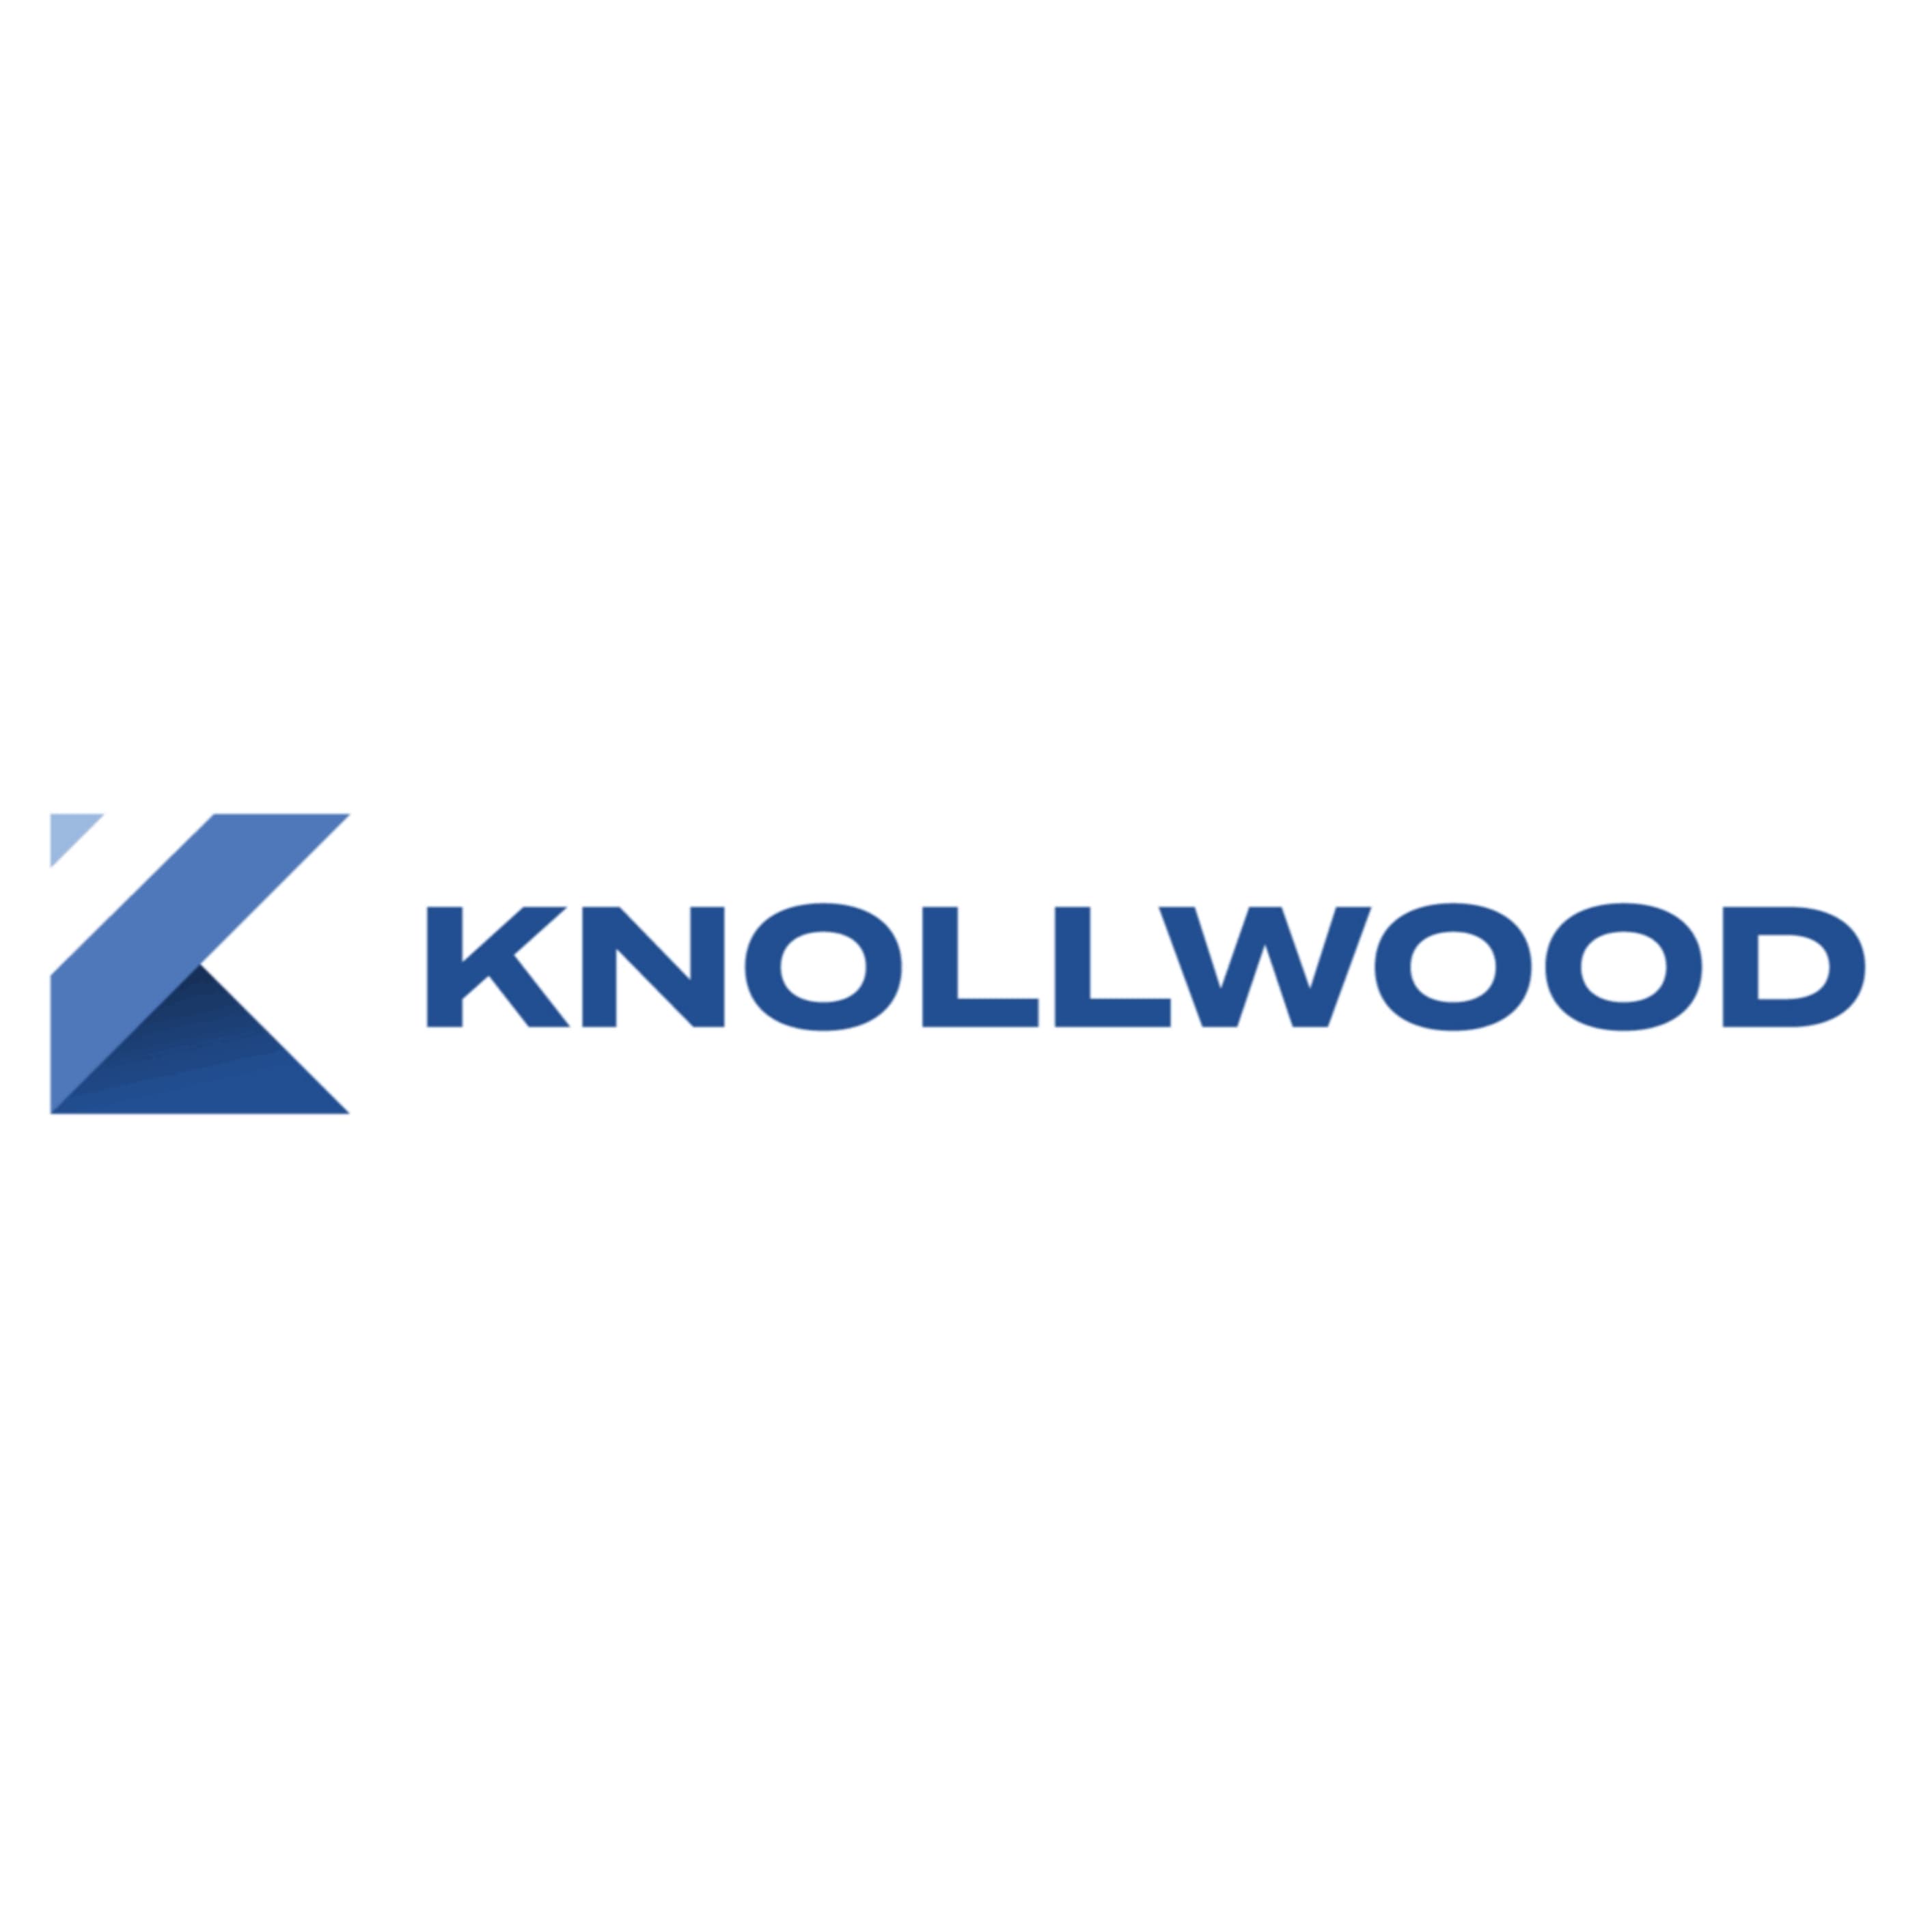 Knollwood Investment Advisory